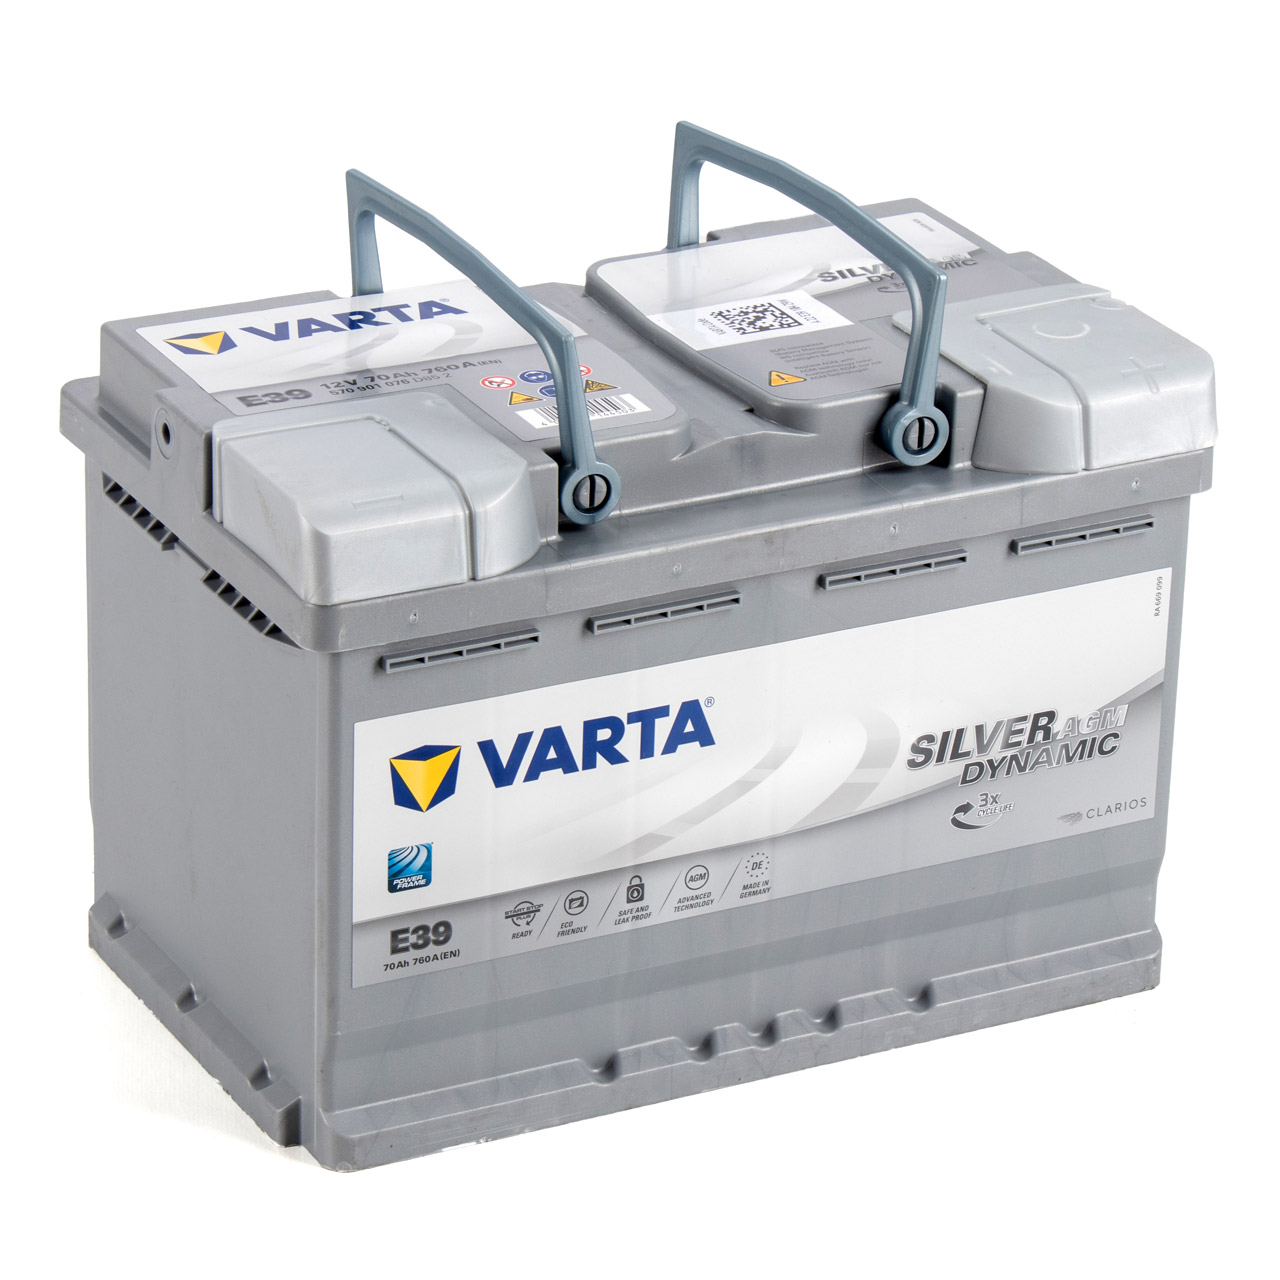 570901076D852 VARTA E39 SILVER dynamic E39 Battery 12V 70Ah 760A B13 AGM  Battery